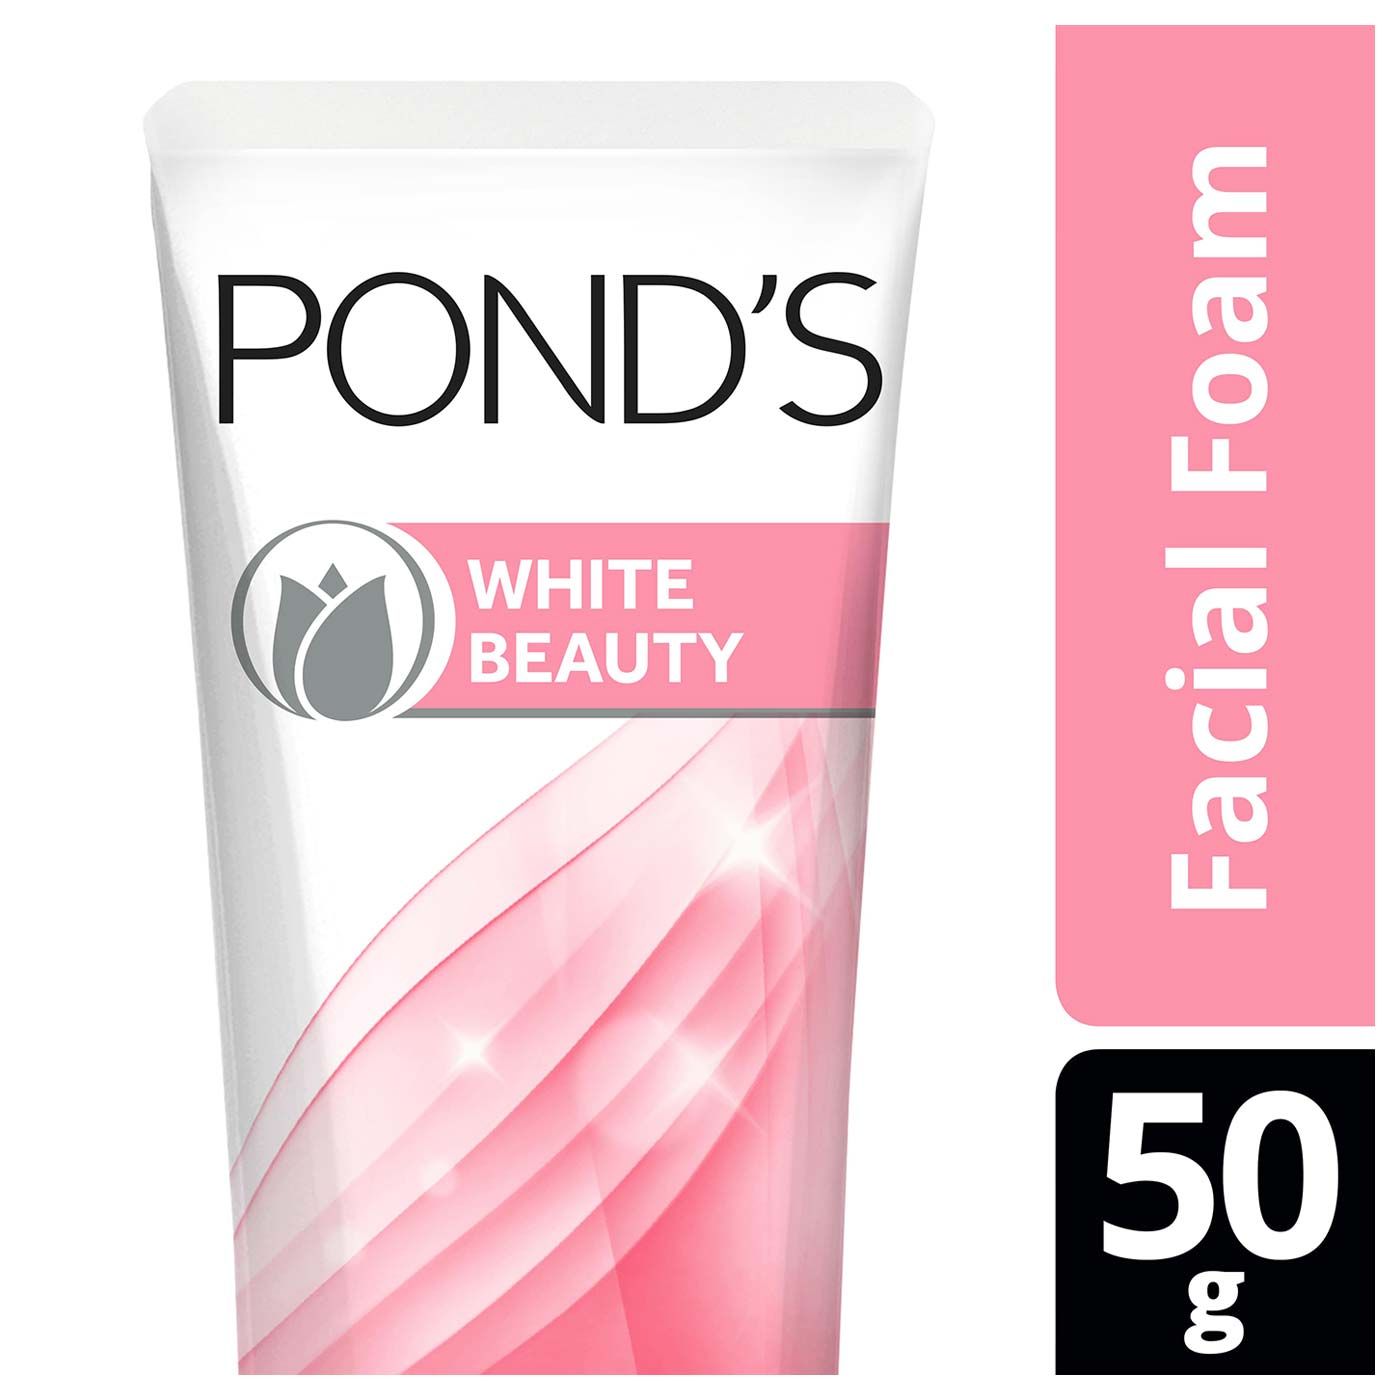 Ponds White Beauty Facial Foam 50g - 1